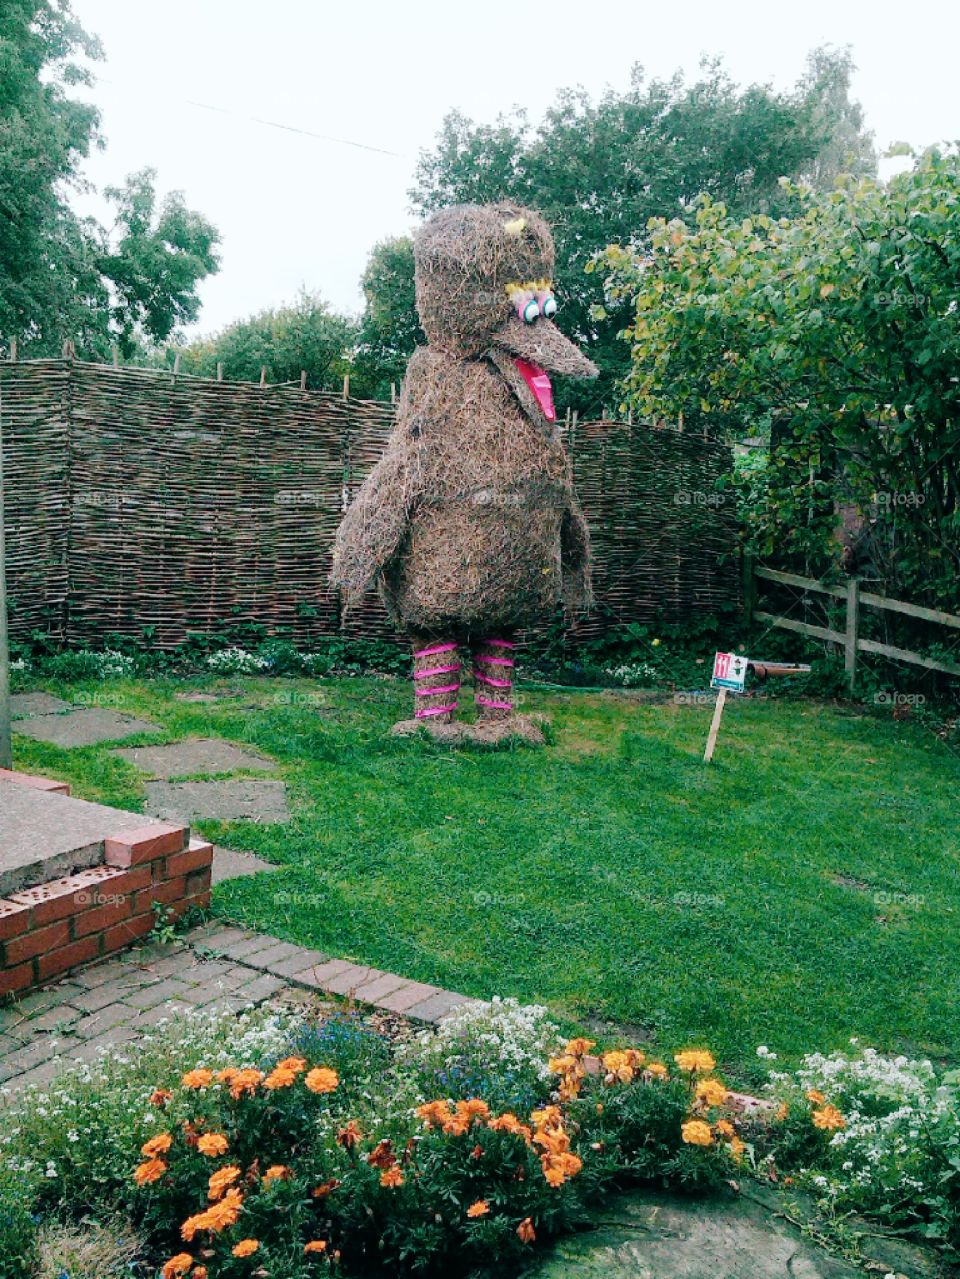 Scarecrow's nemesis, Lapworth, Warwickshire